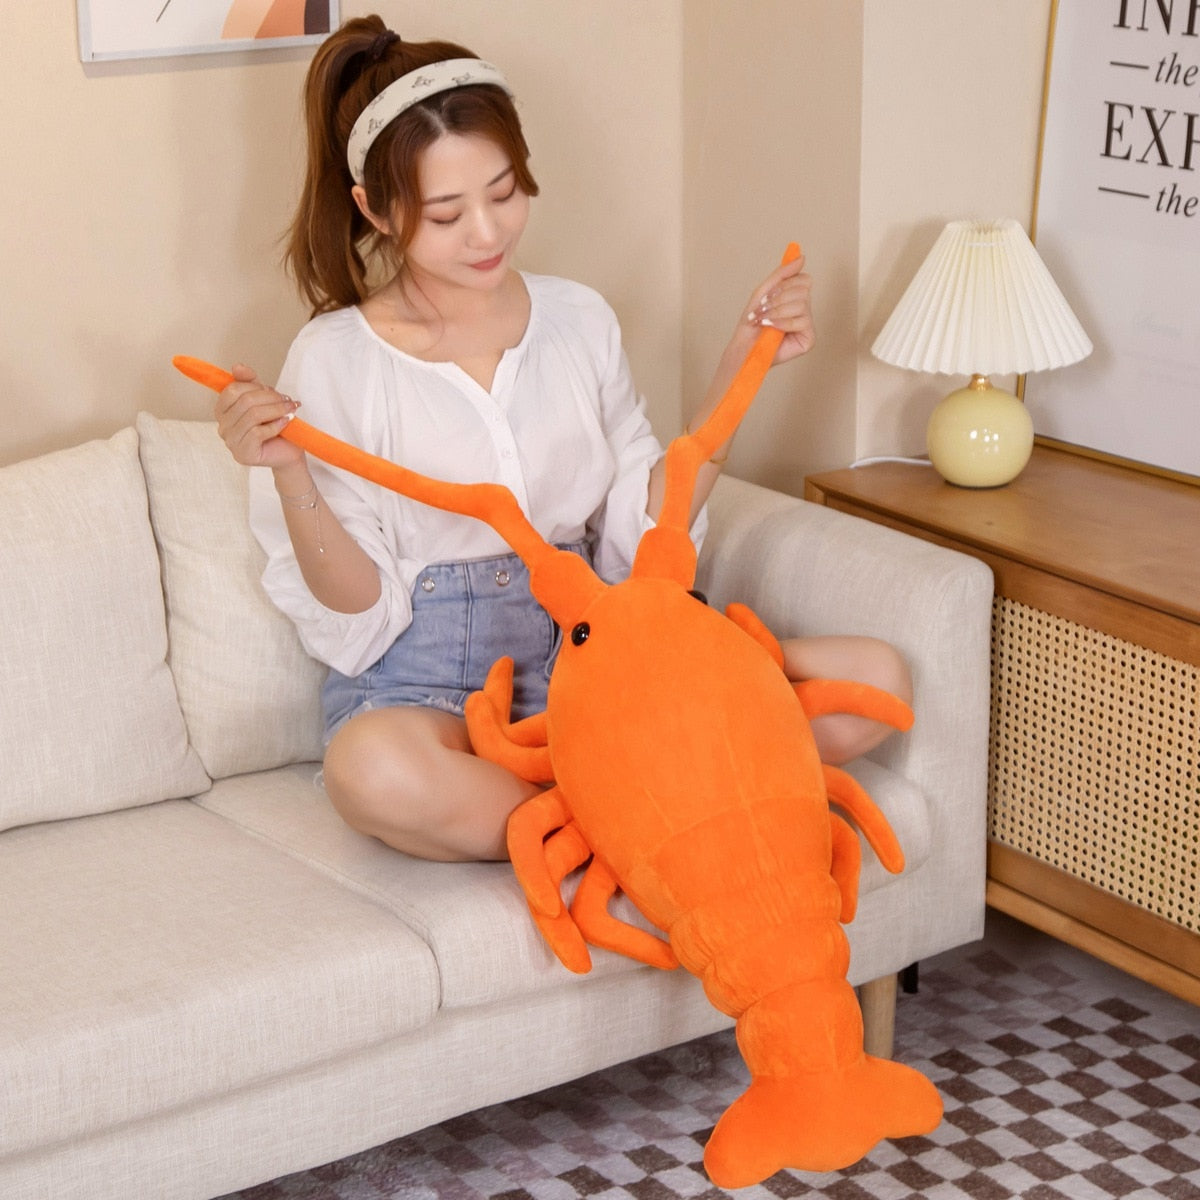 50-65cm Kawaii Red Lobster Plush Toys